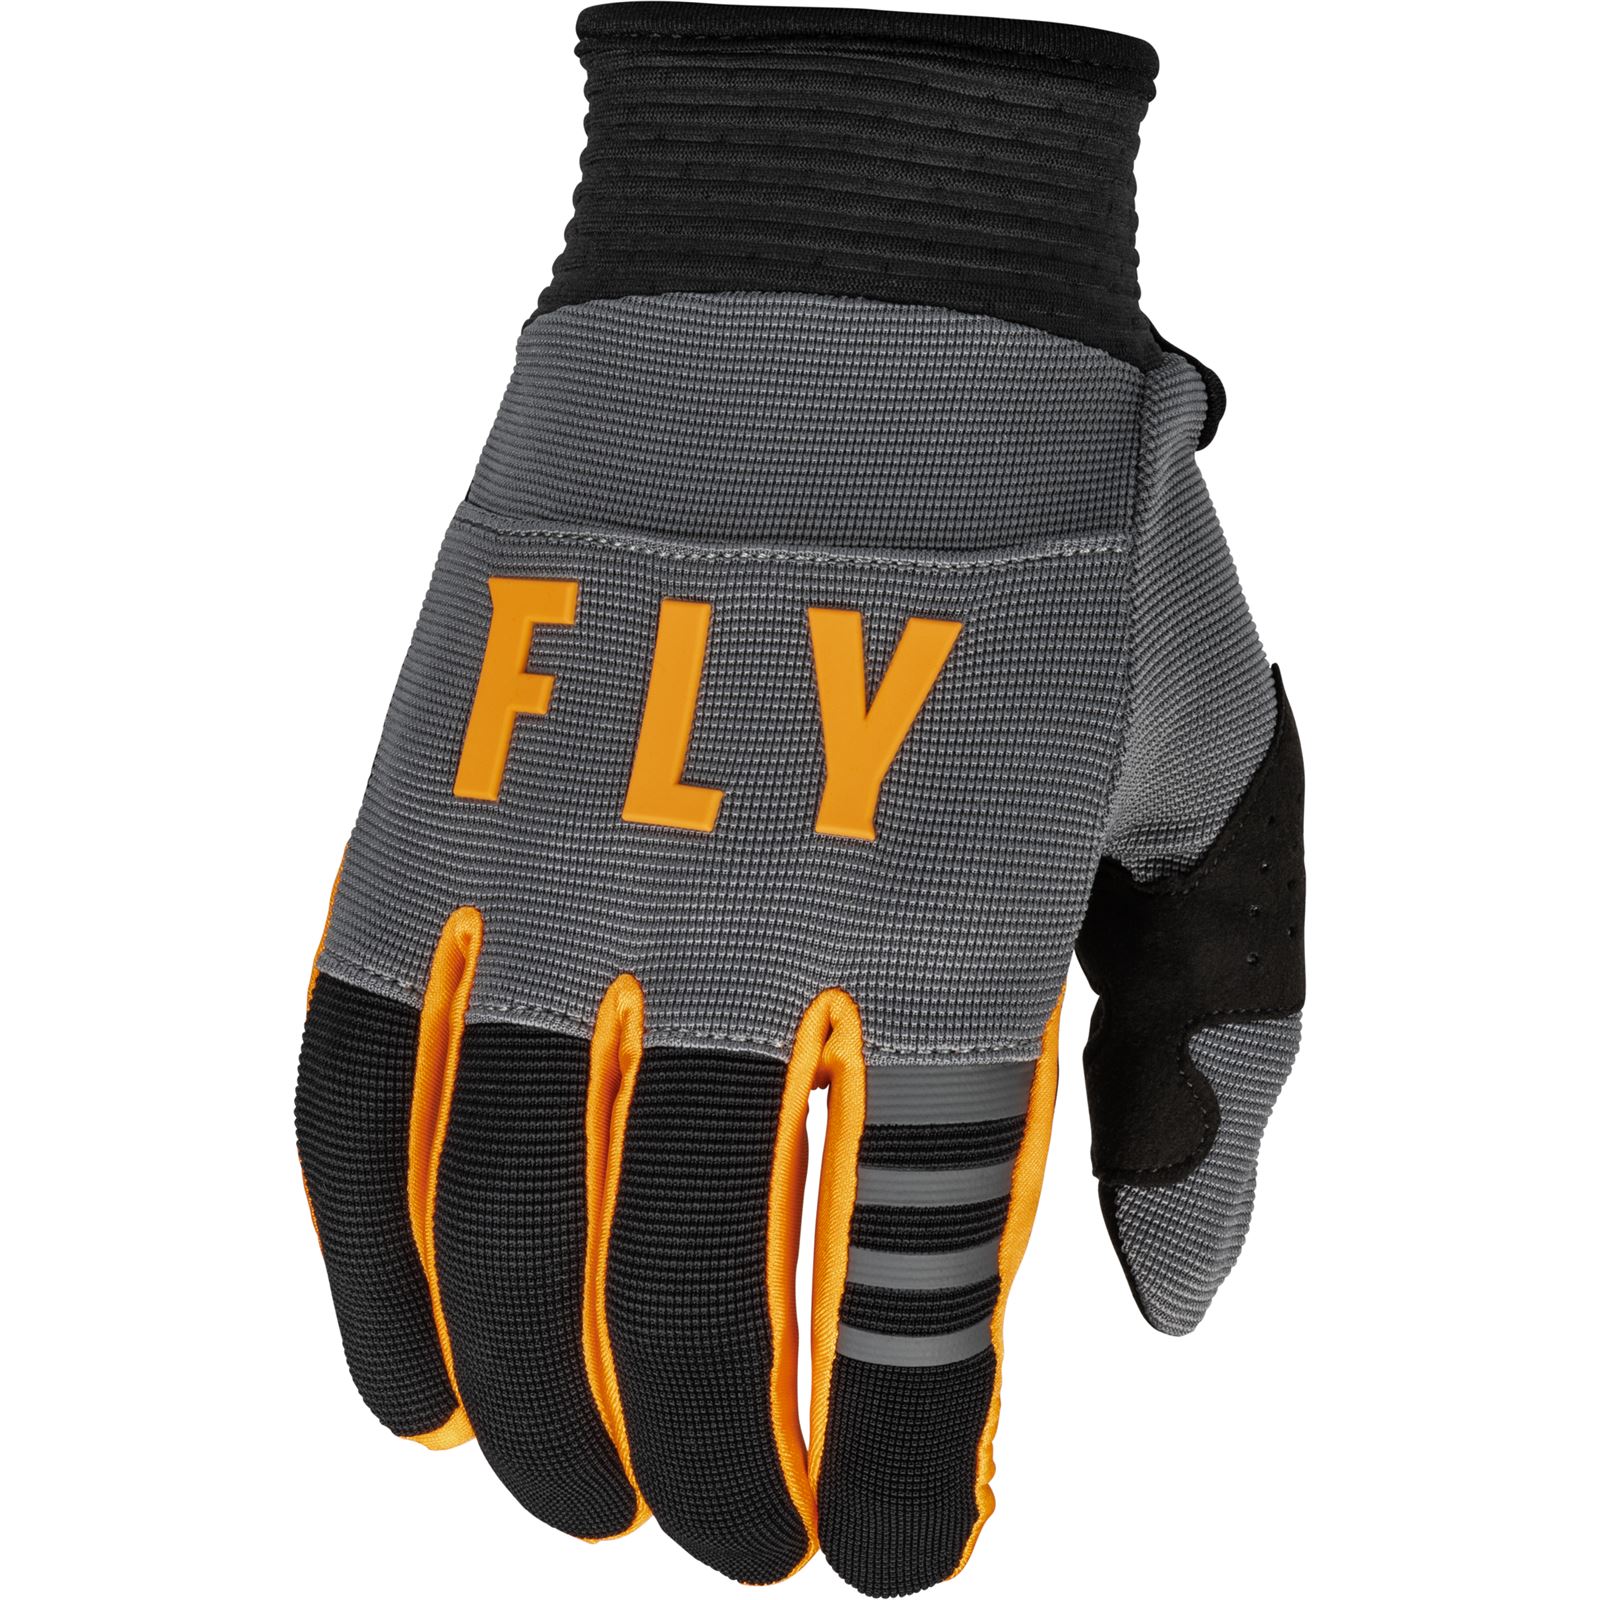 Fly Racing Youth F-16 Gloves - Dark Grey/Black/Orange - Medium